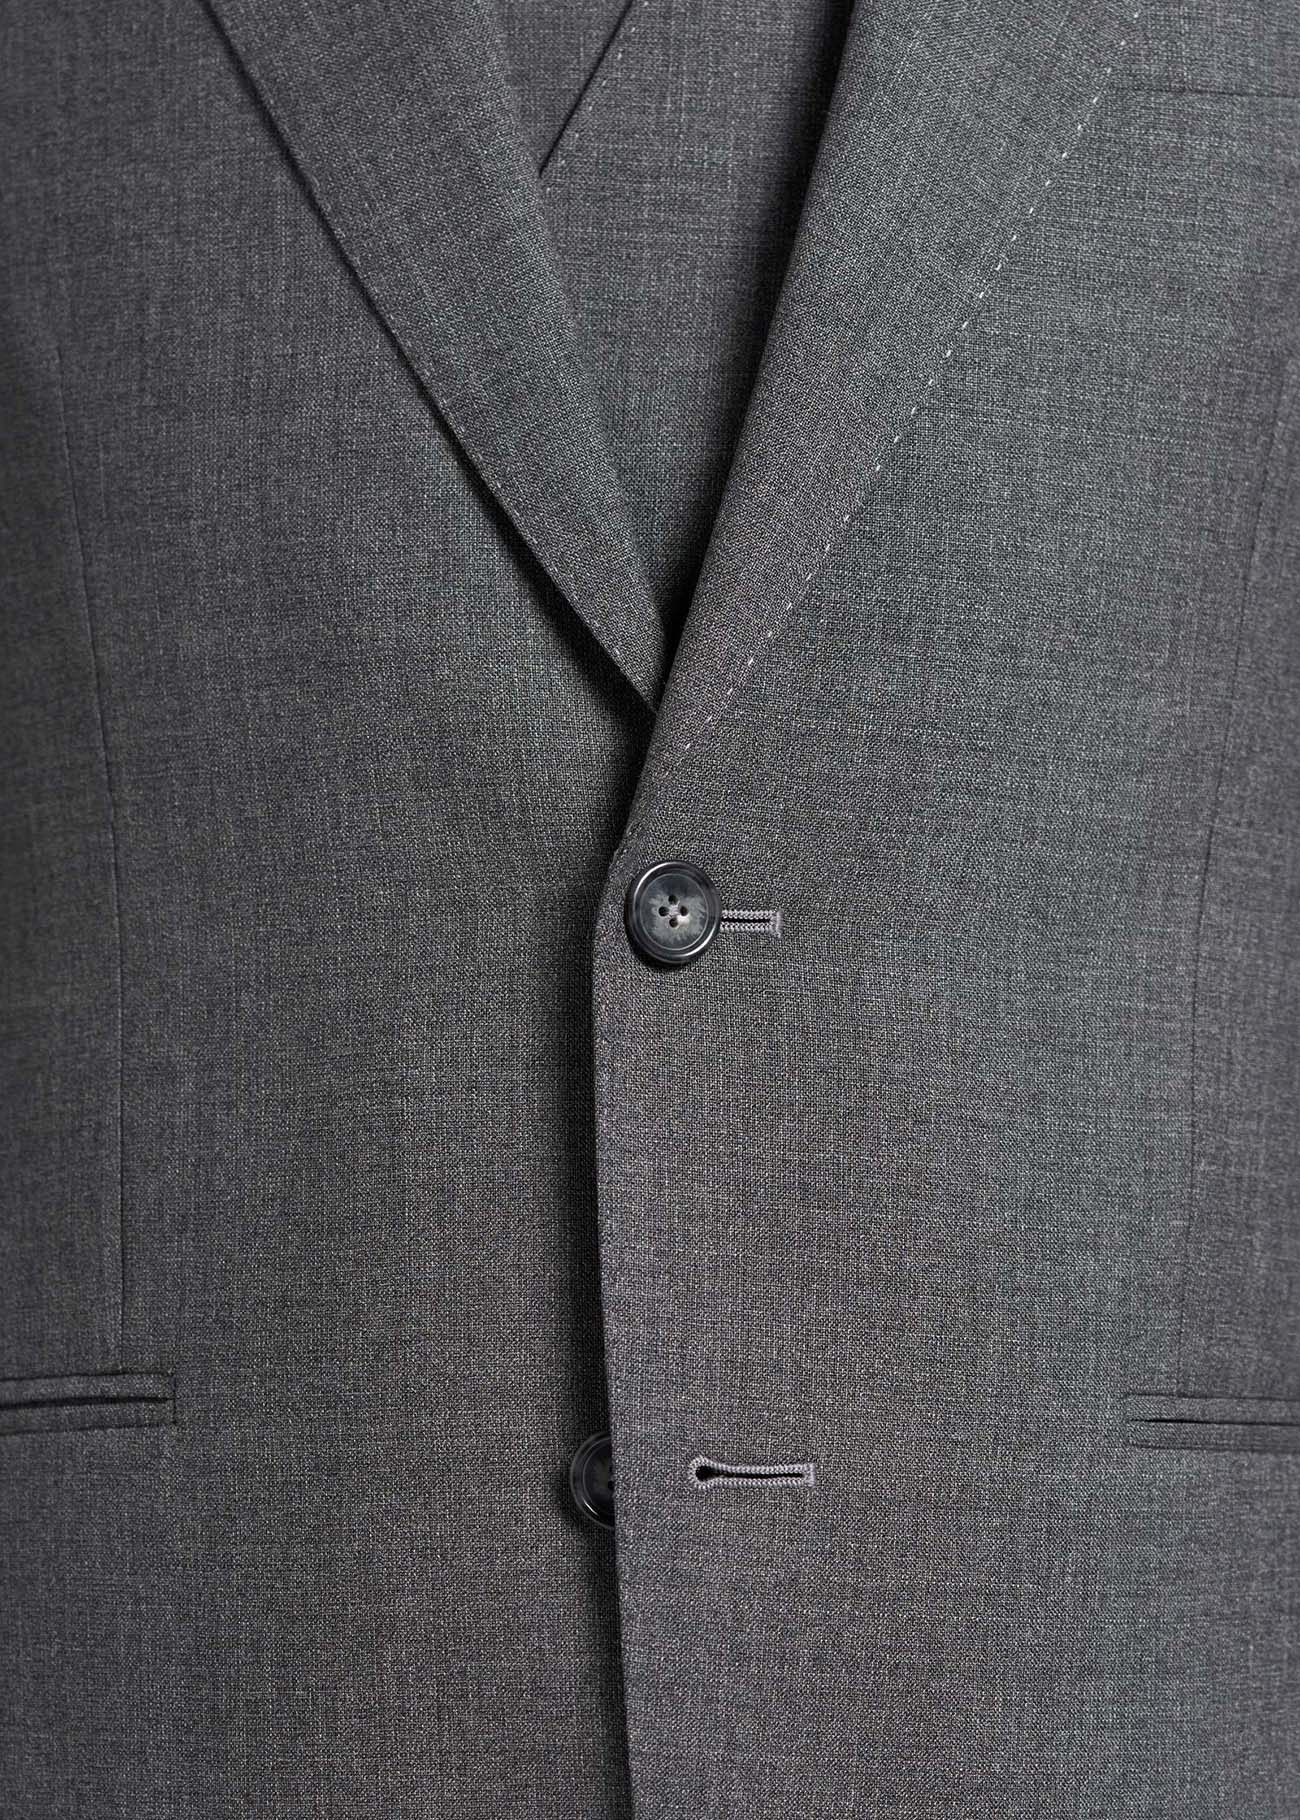 Charcoal-Basic-Tropical-Mond-Custom-Suit-Detail-Close-Up